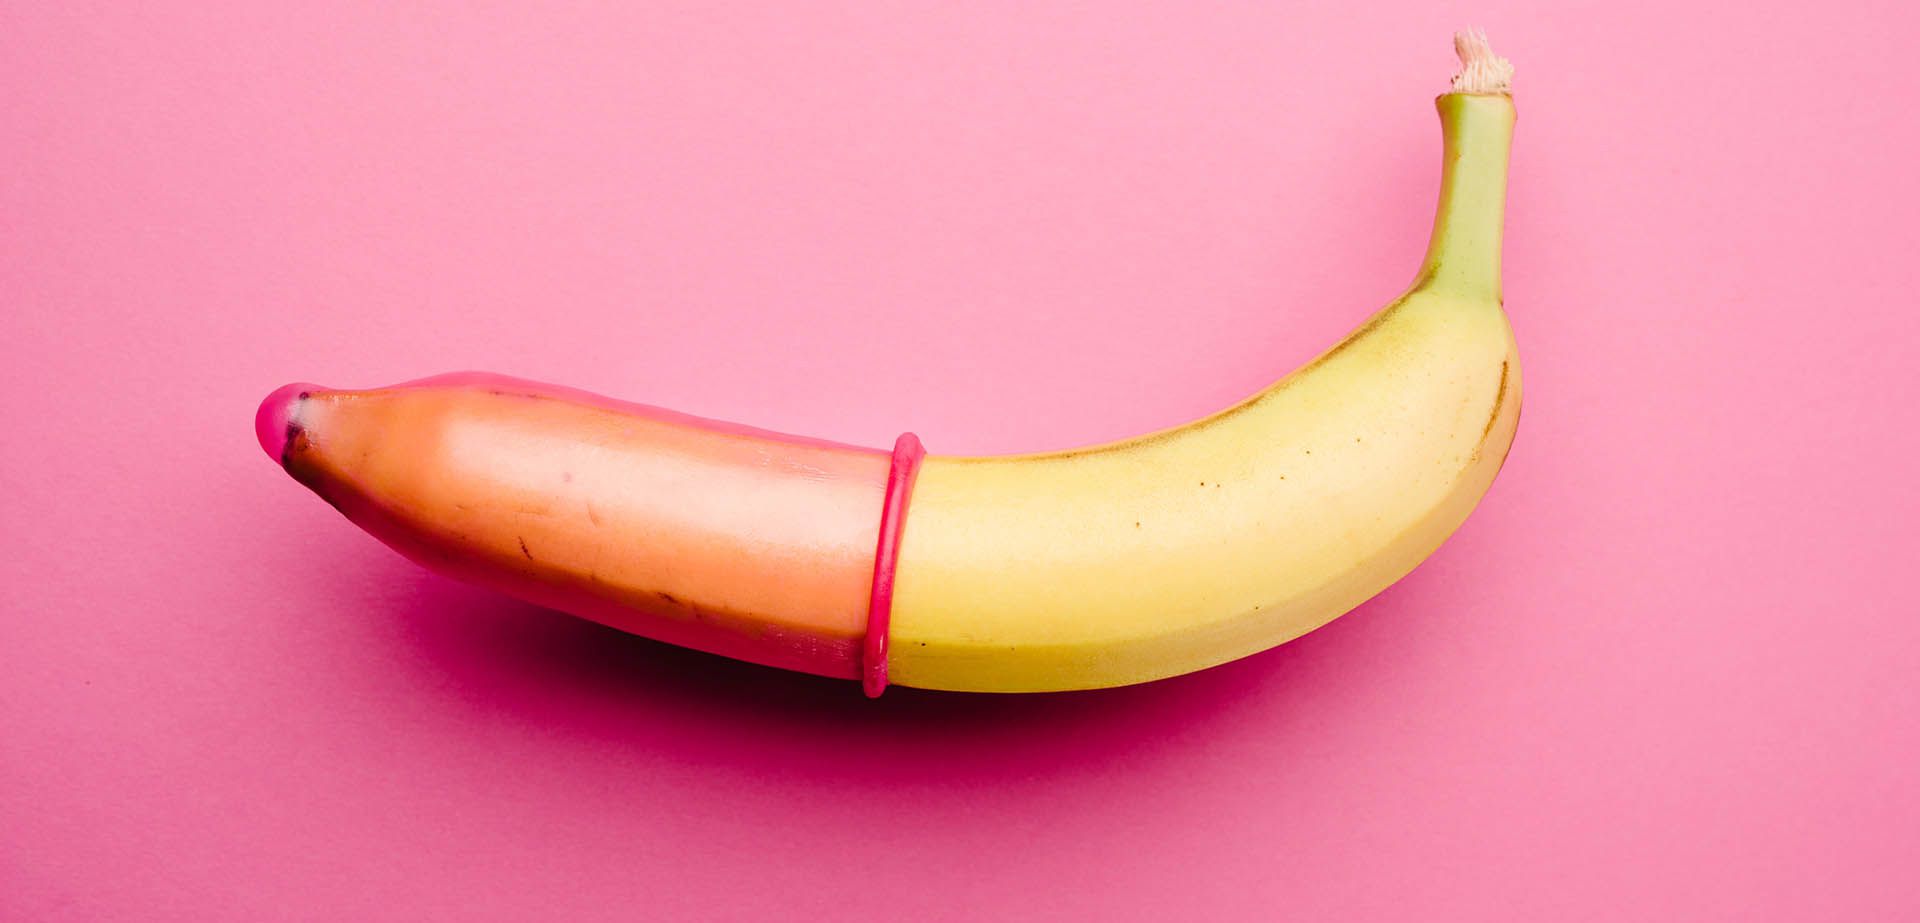 Banana in a condom.